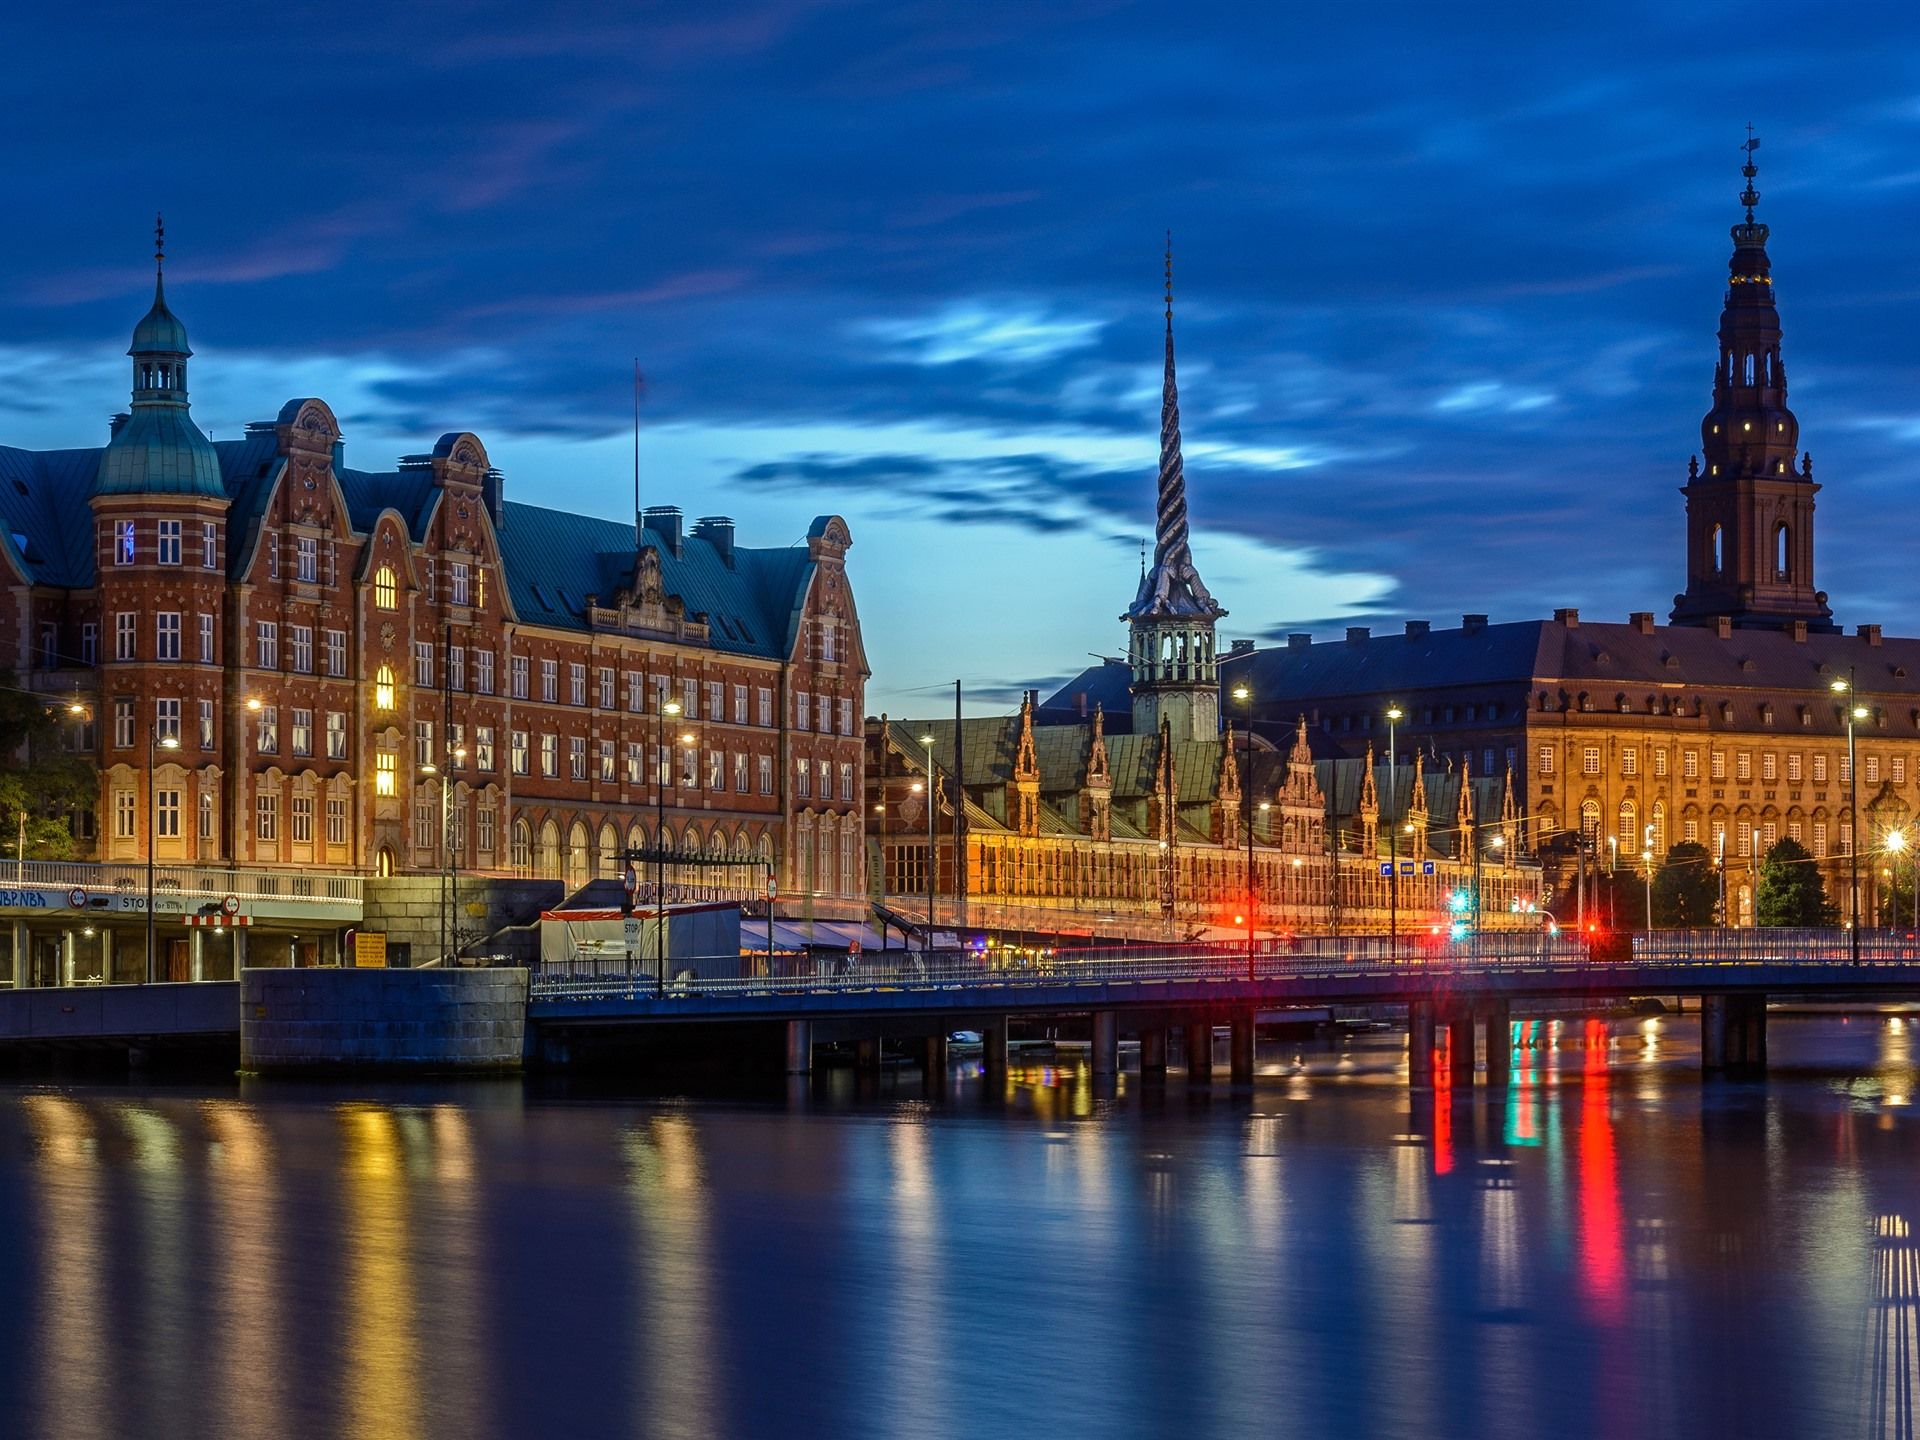 Wallpaper Denmark, city at night, bridge, houses, lights 3840x2160 UHD 4K Picture, Image